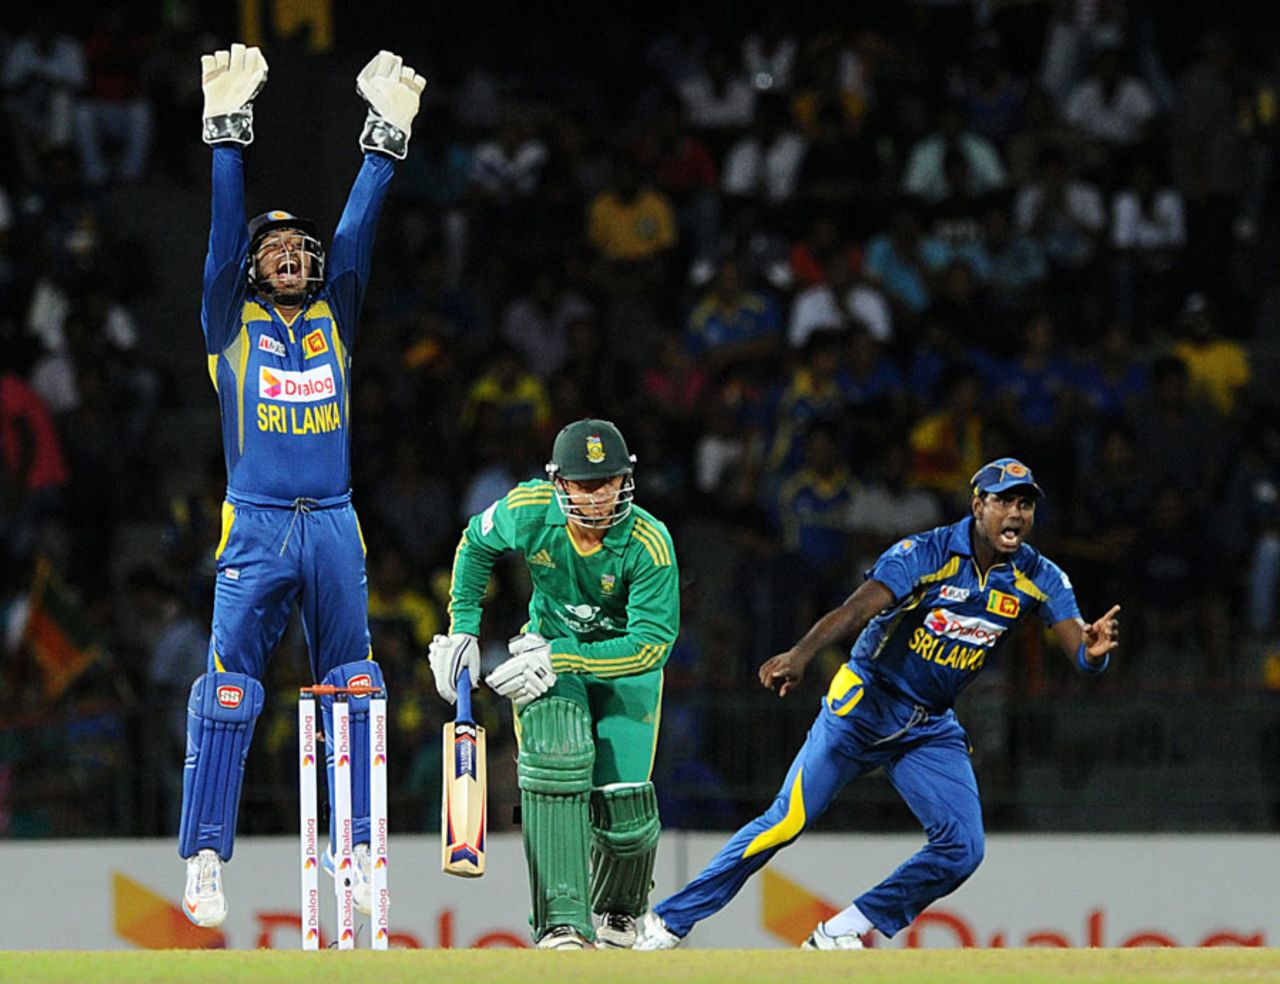 Kumar Sangakkara and Angelo Mathews appeal for the wicket of Quinton de Kock, Sri Lanka v South Africa, 1st T20, Colombo, August 2, 2013